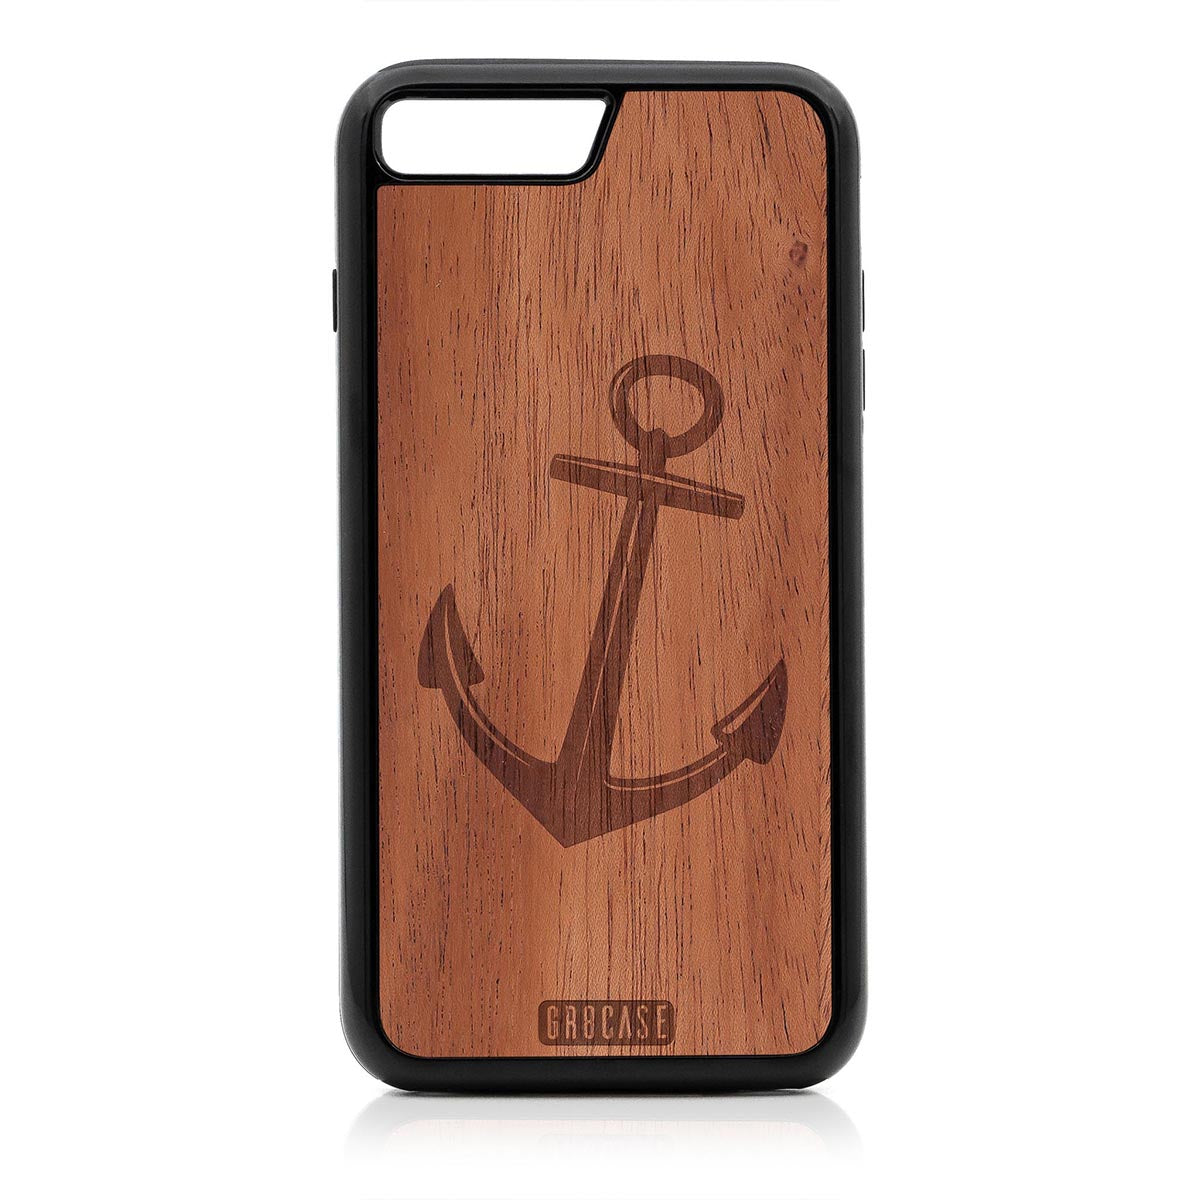 Anchor Design Wood Case For iPhone 7 Plus / 8 Plus by GR8CASE